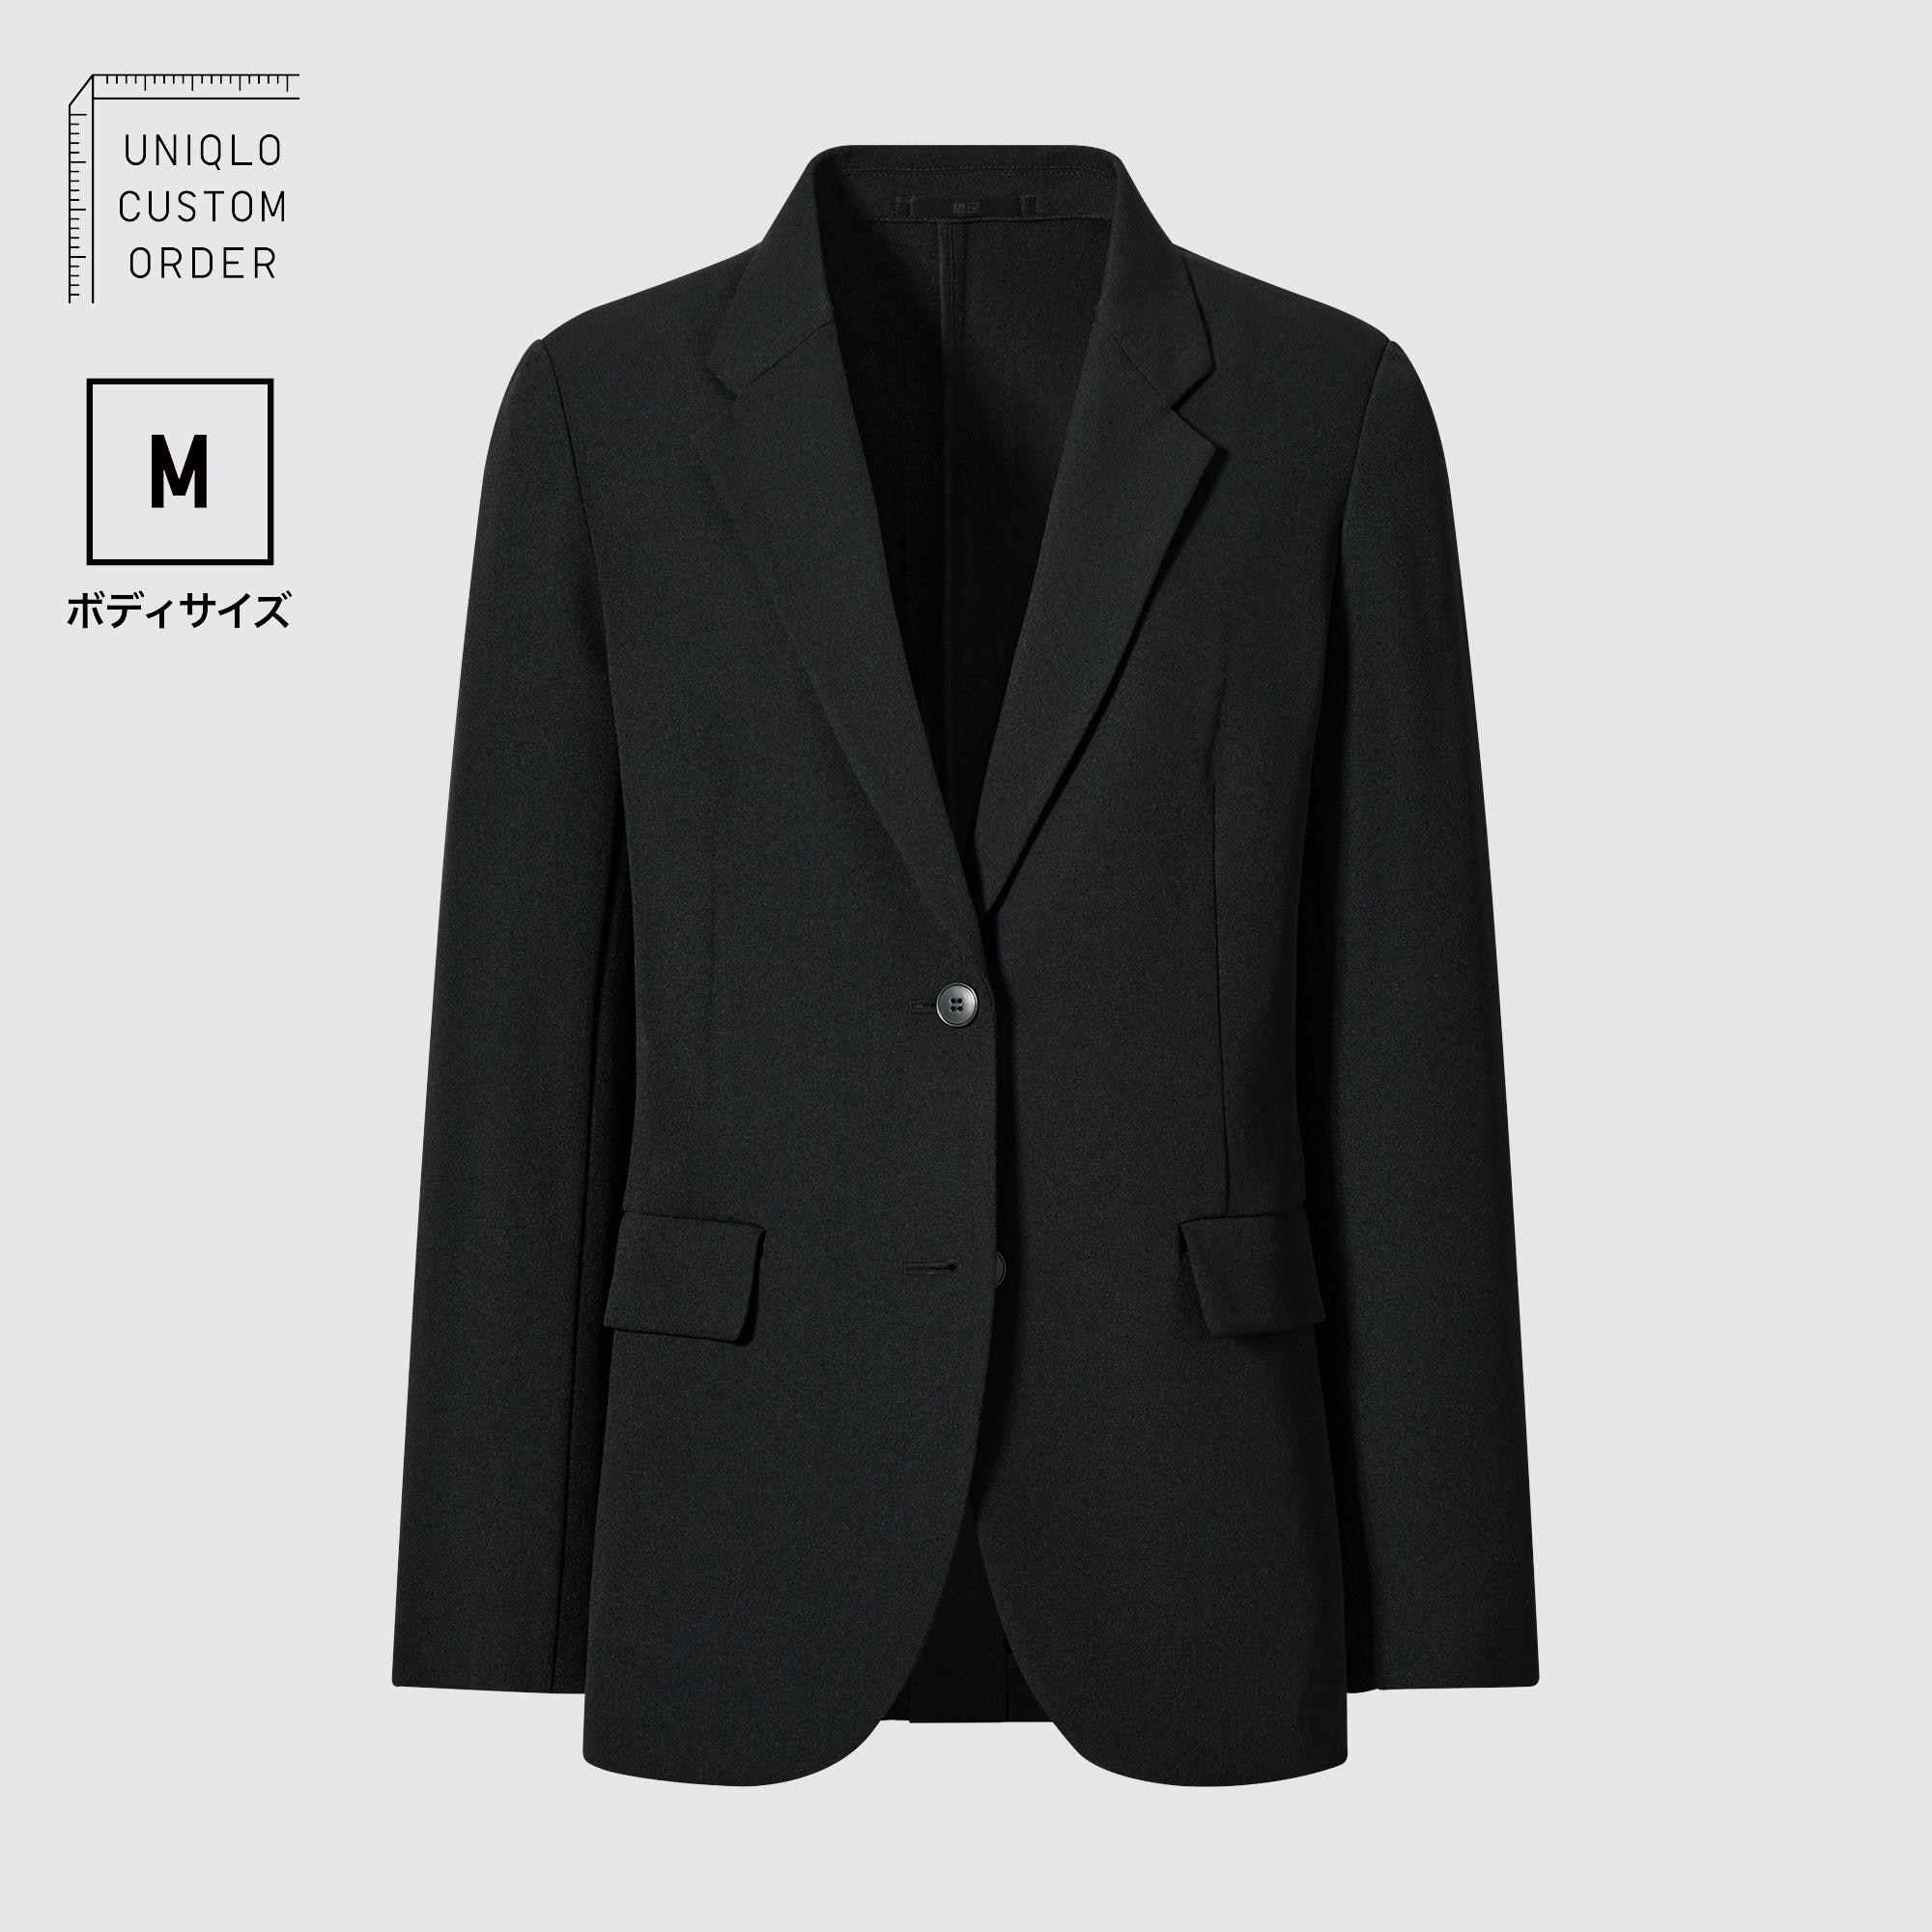 Куртка UNIQLO Кандо M, черный цена и фото